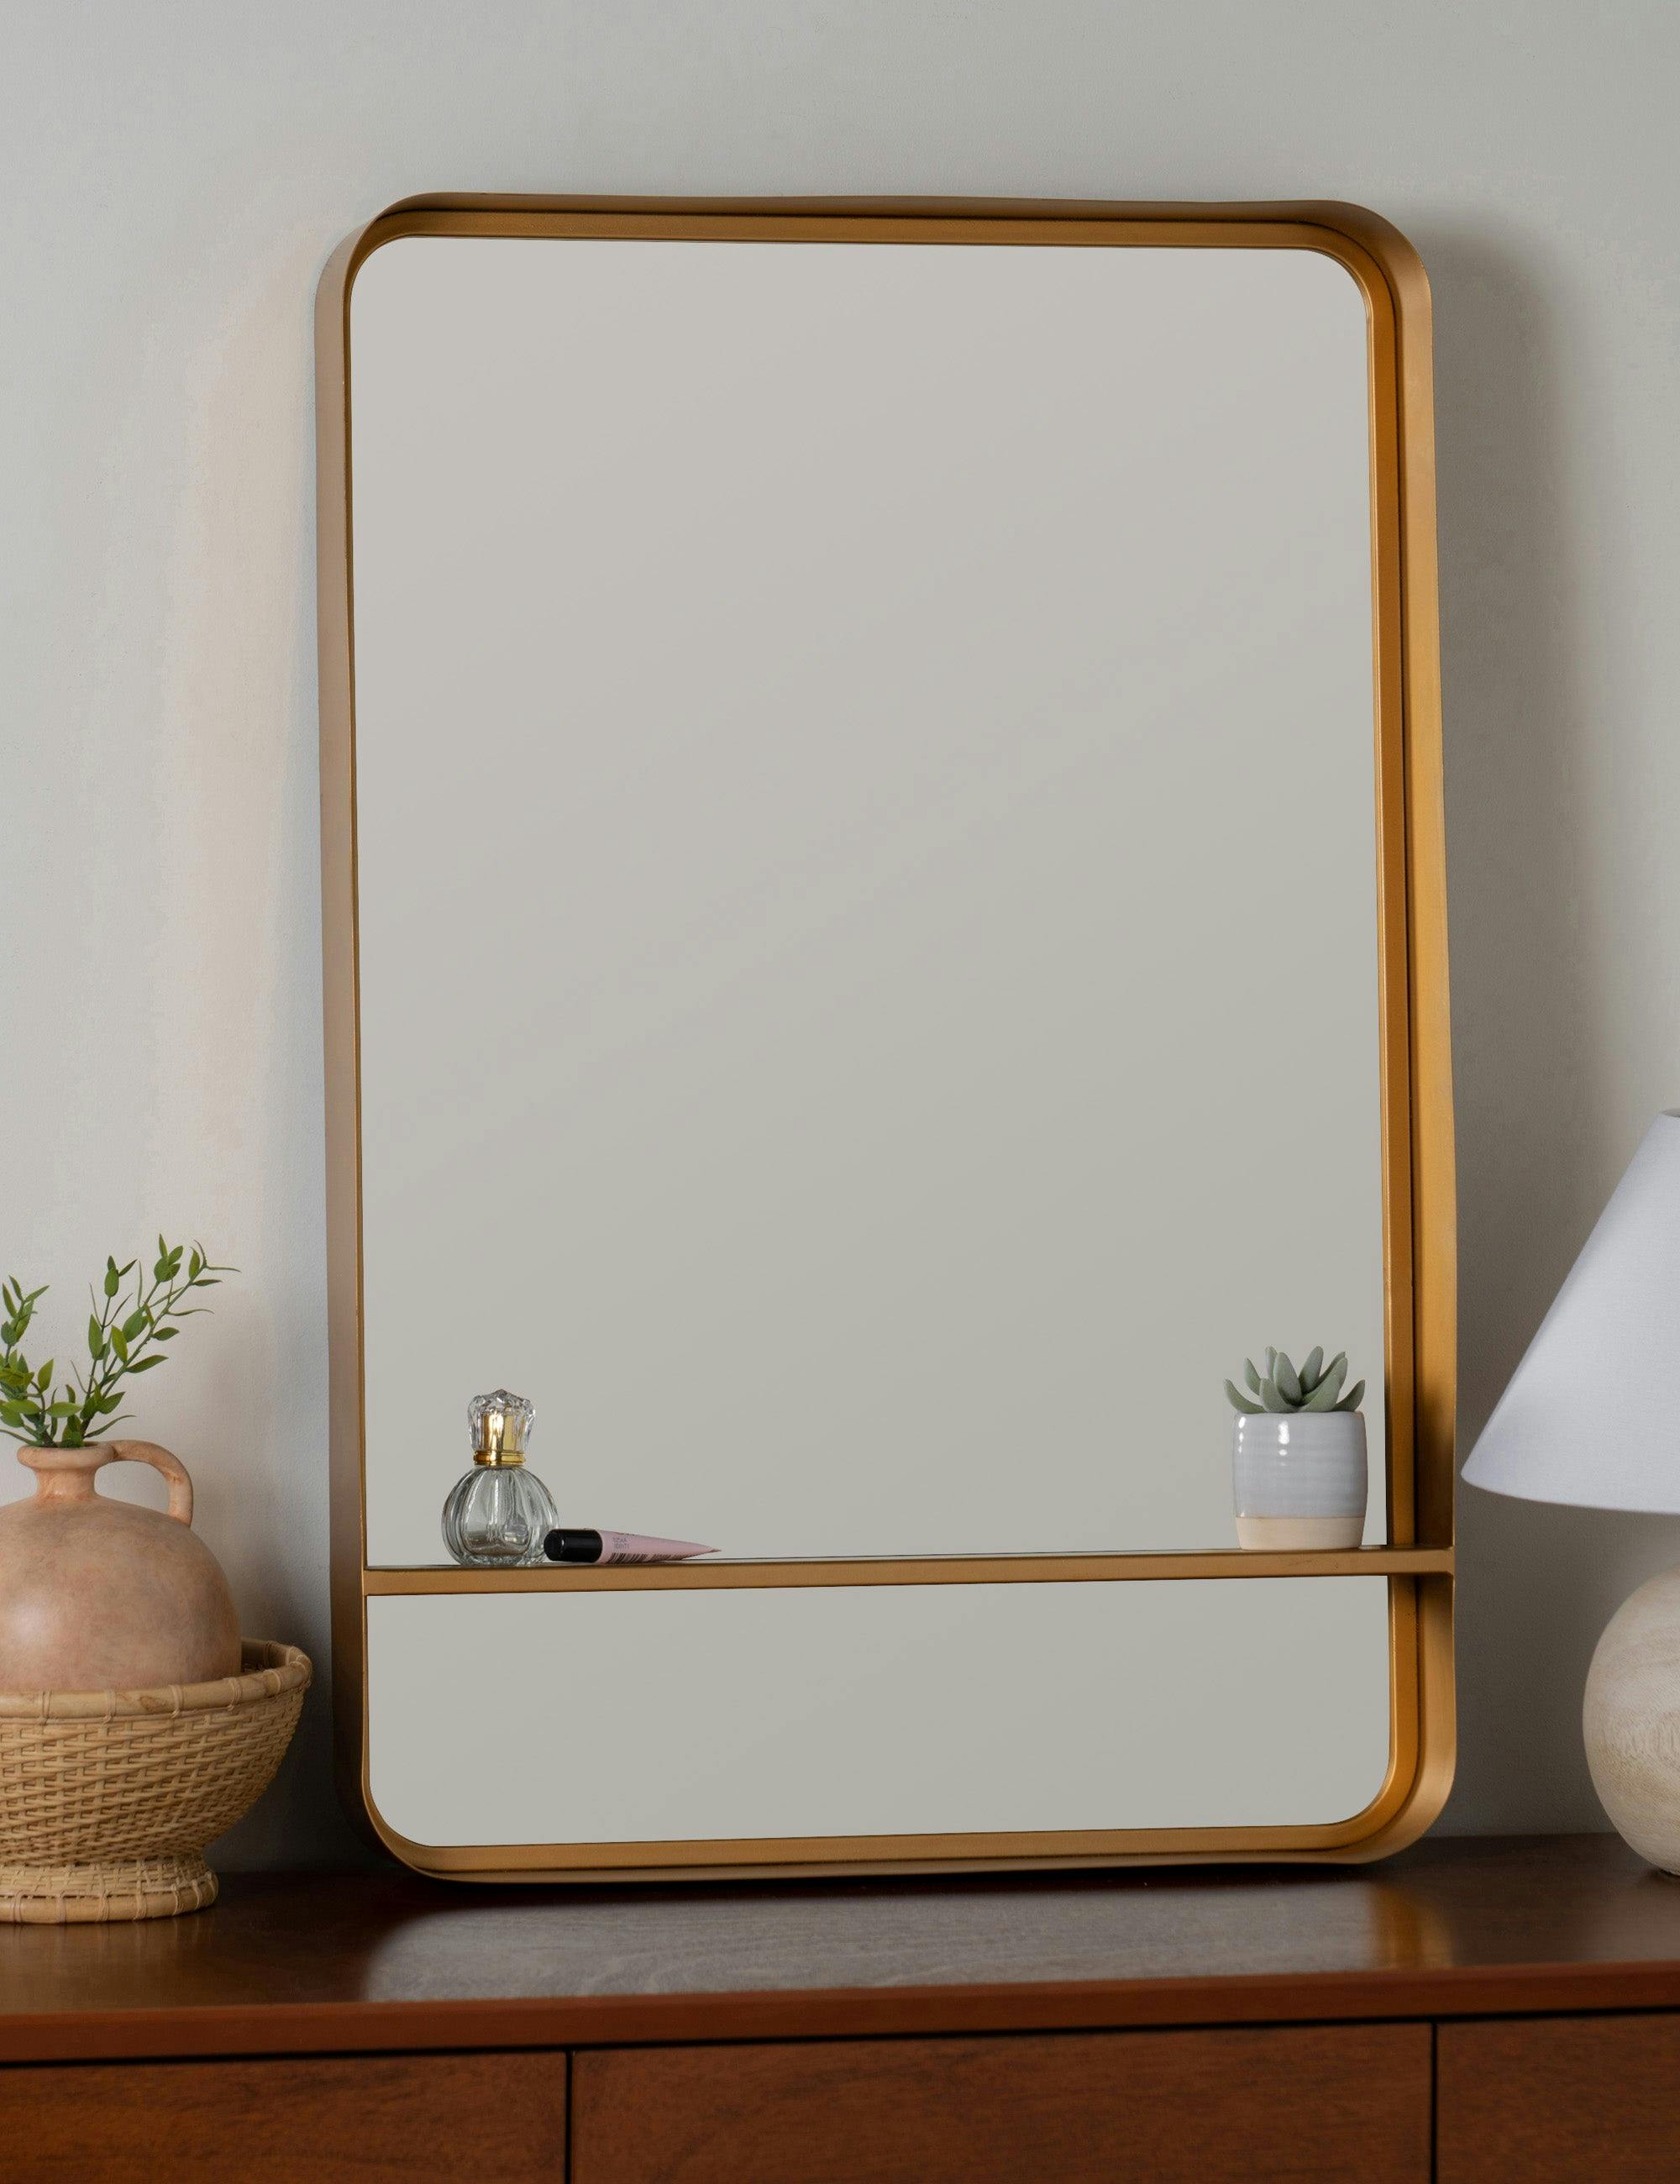 Elegant Rectangular Bronze and Gold Wood Bathroom Vanity Mirror with Shelf